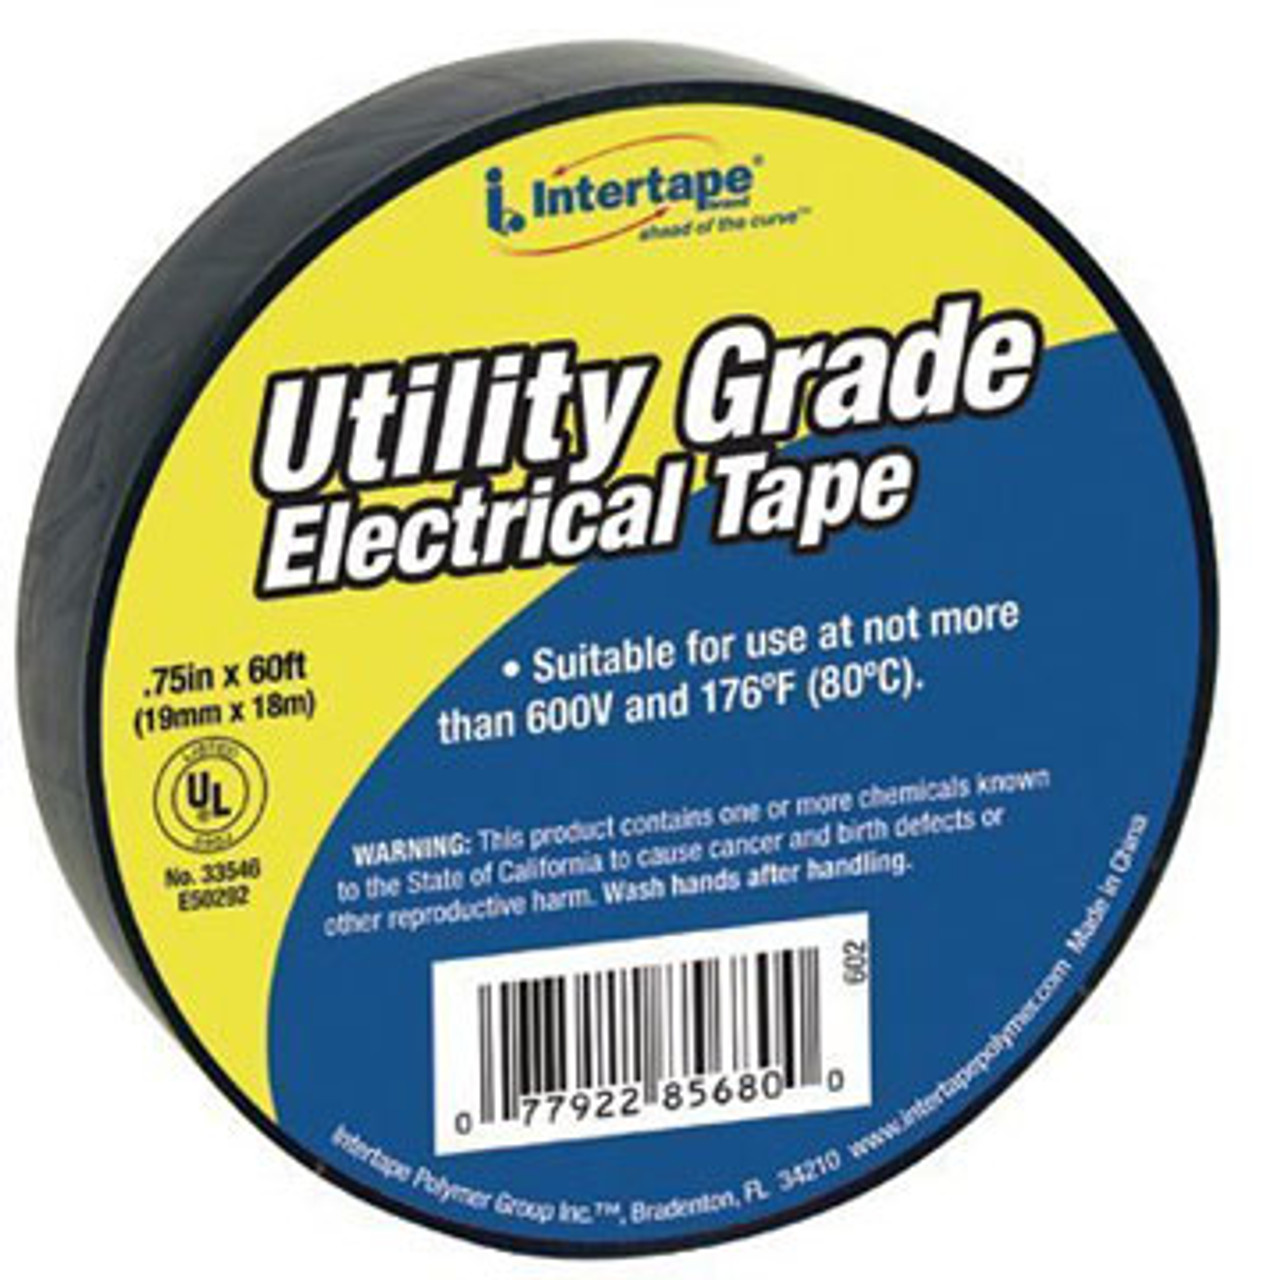 Uline Industrial Duct Tape - 2 x 60 yds, Black